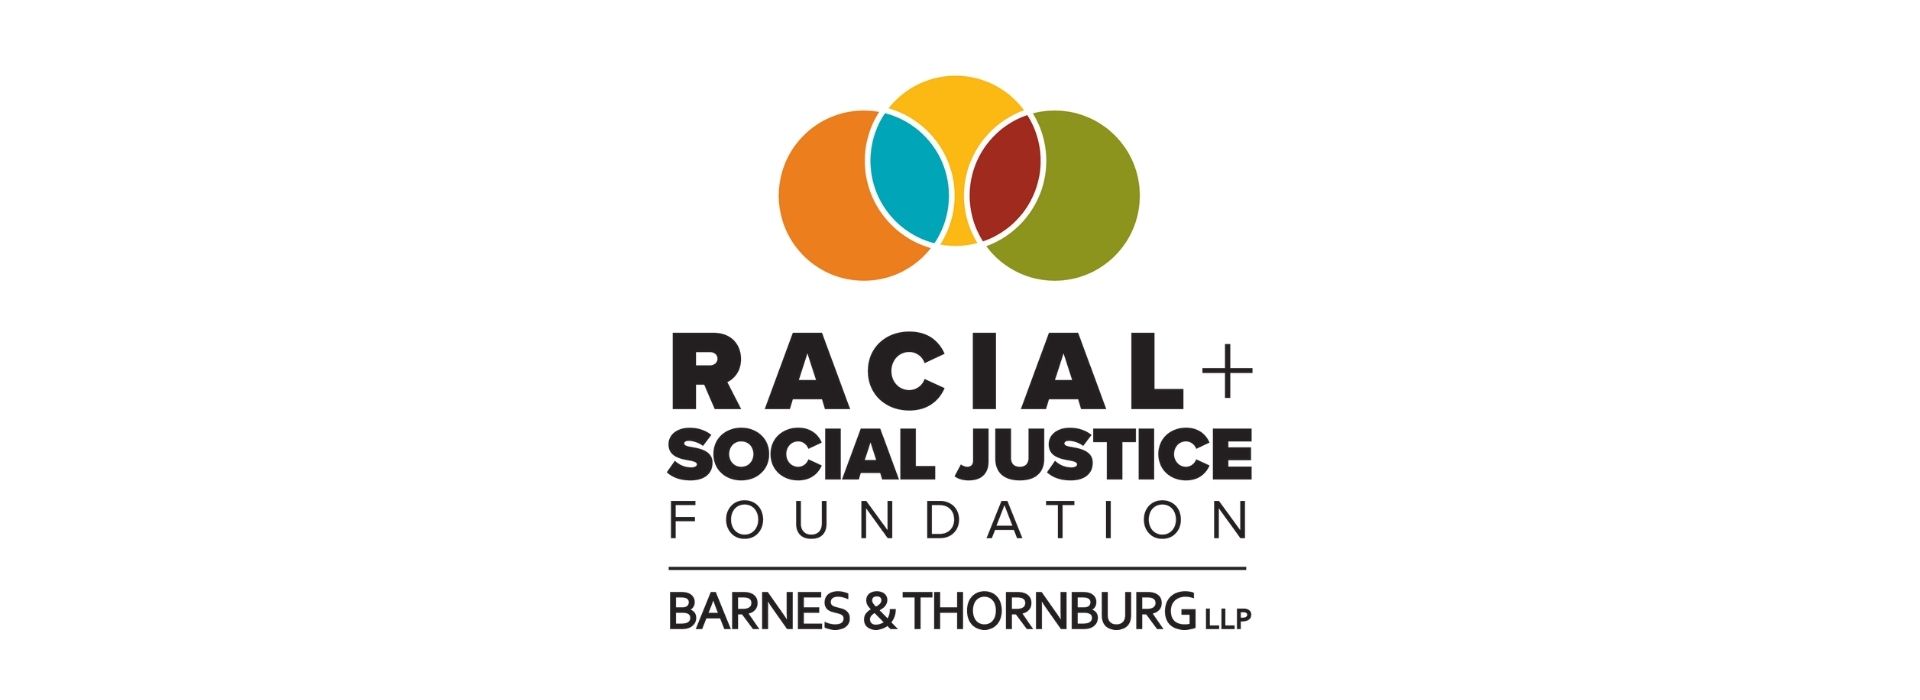 Barnes & Thornburg Racial and Social Justice Foundation